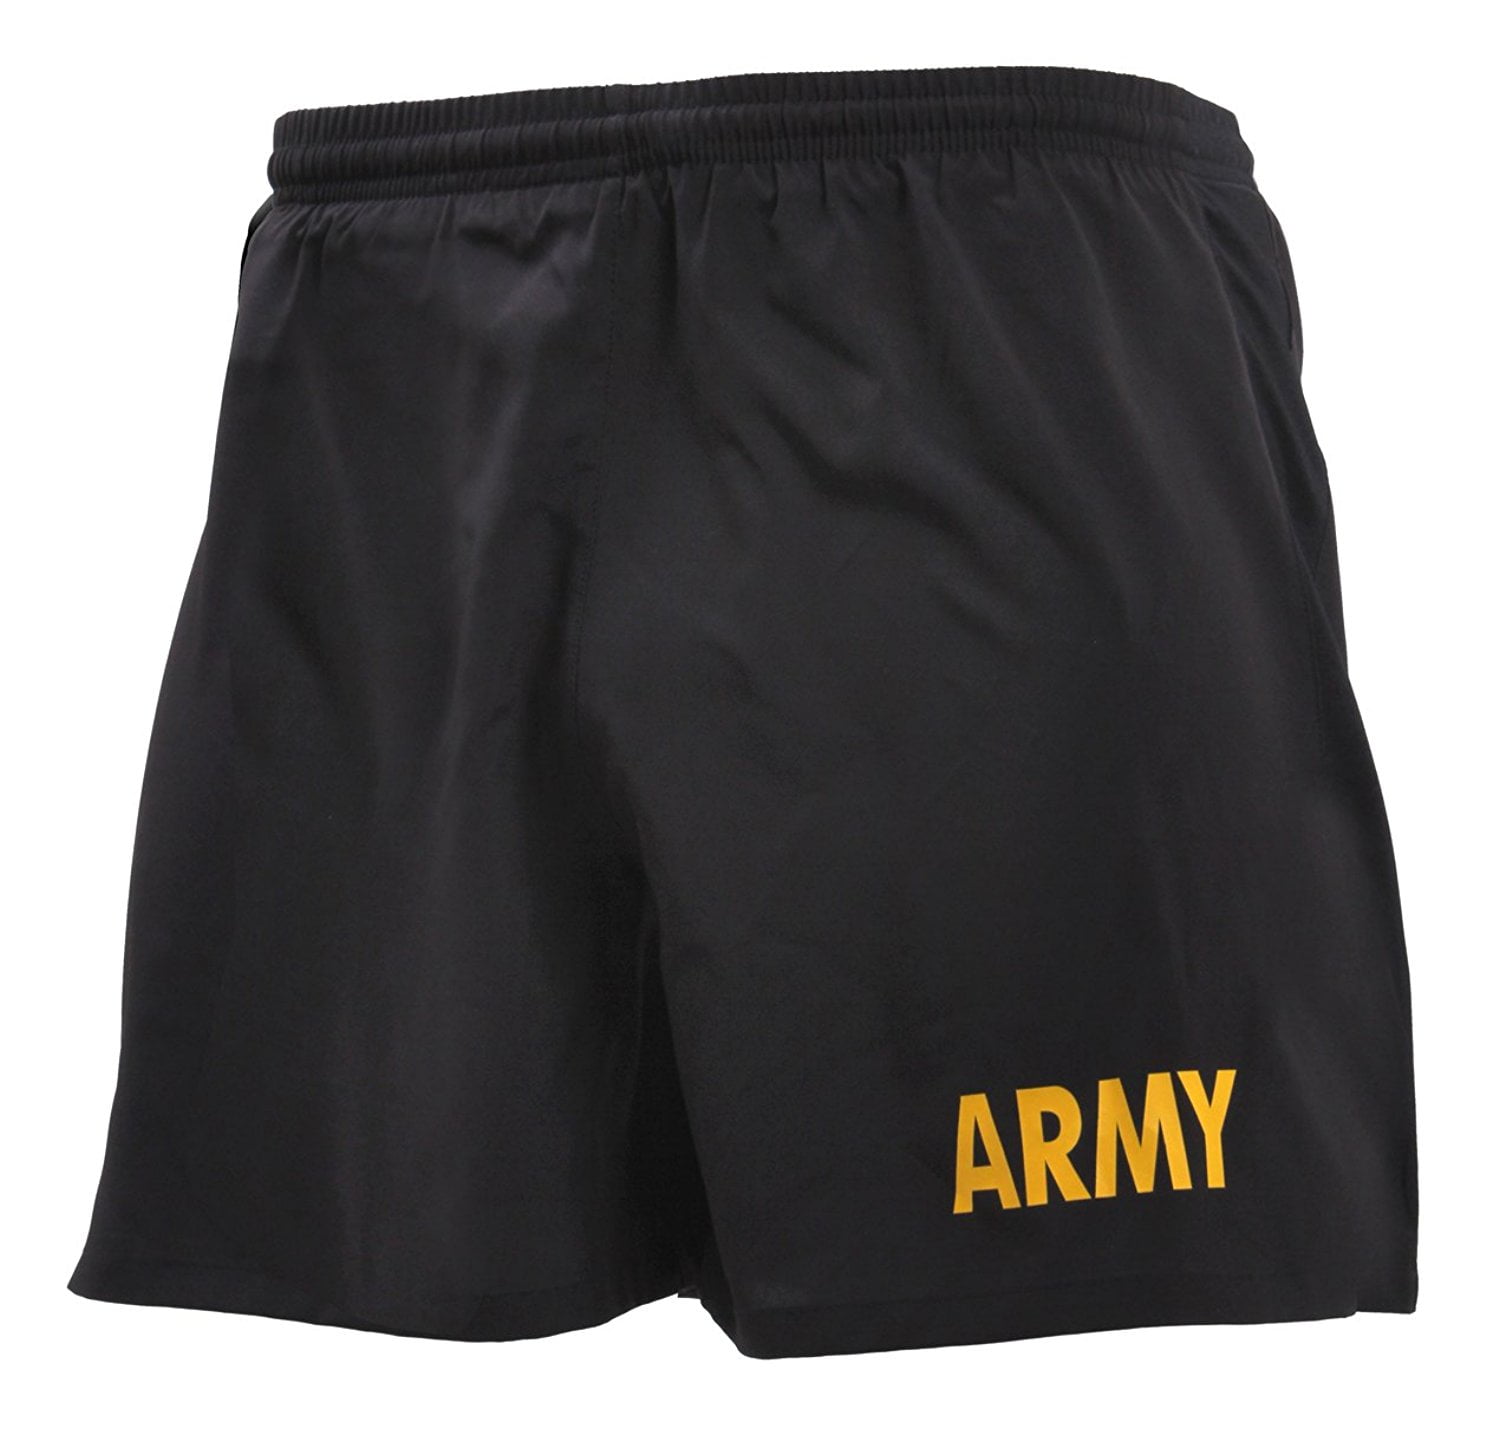 new army pt uniform regulation